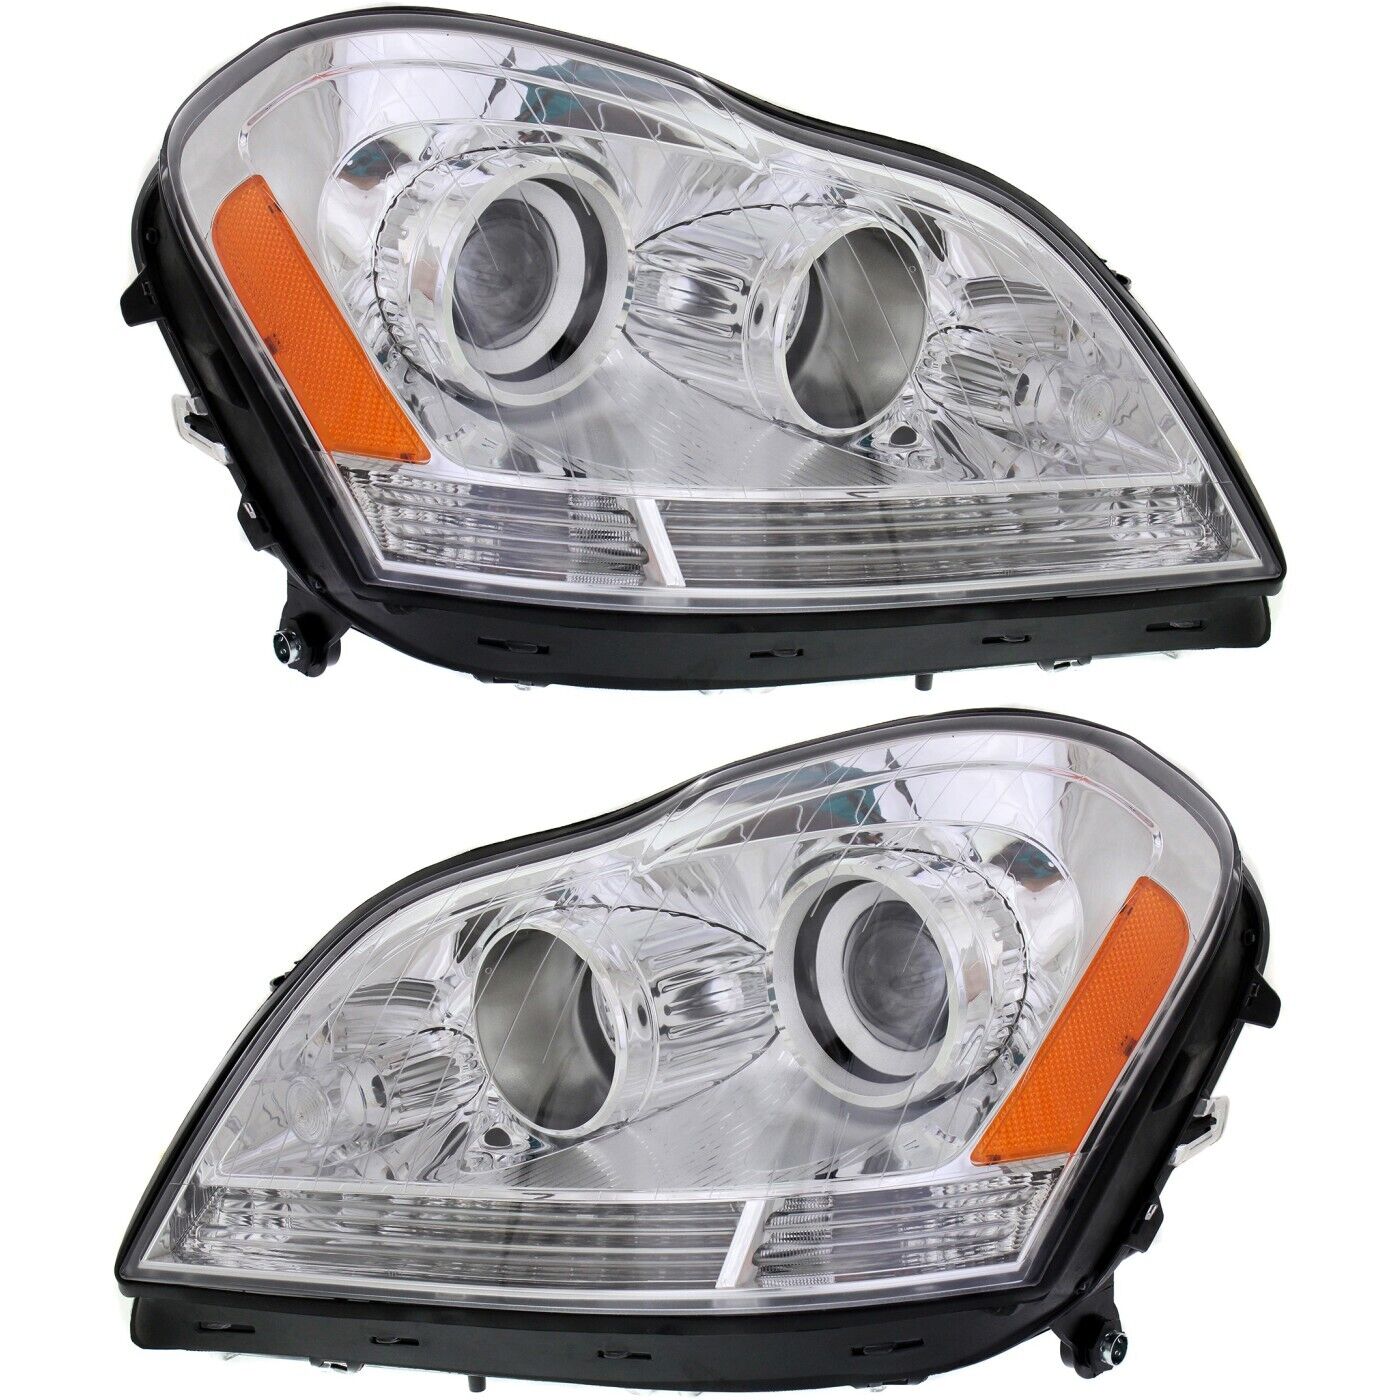 Headlight Set For 2007-2012 Mercedes Benz GL450 Left & Right Side w/ bulb